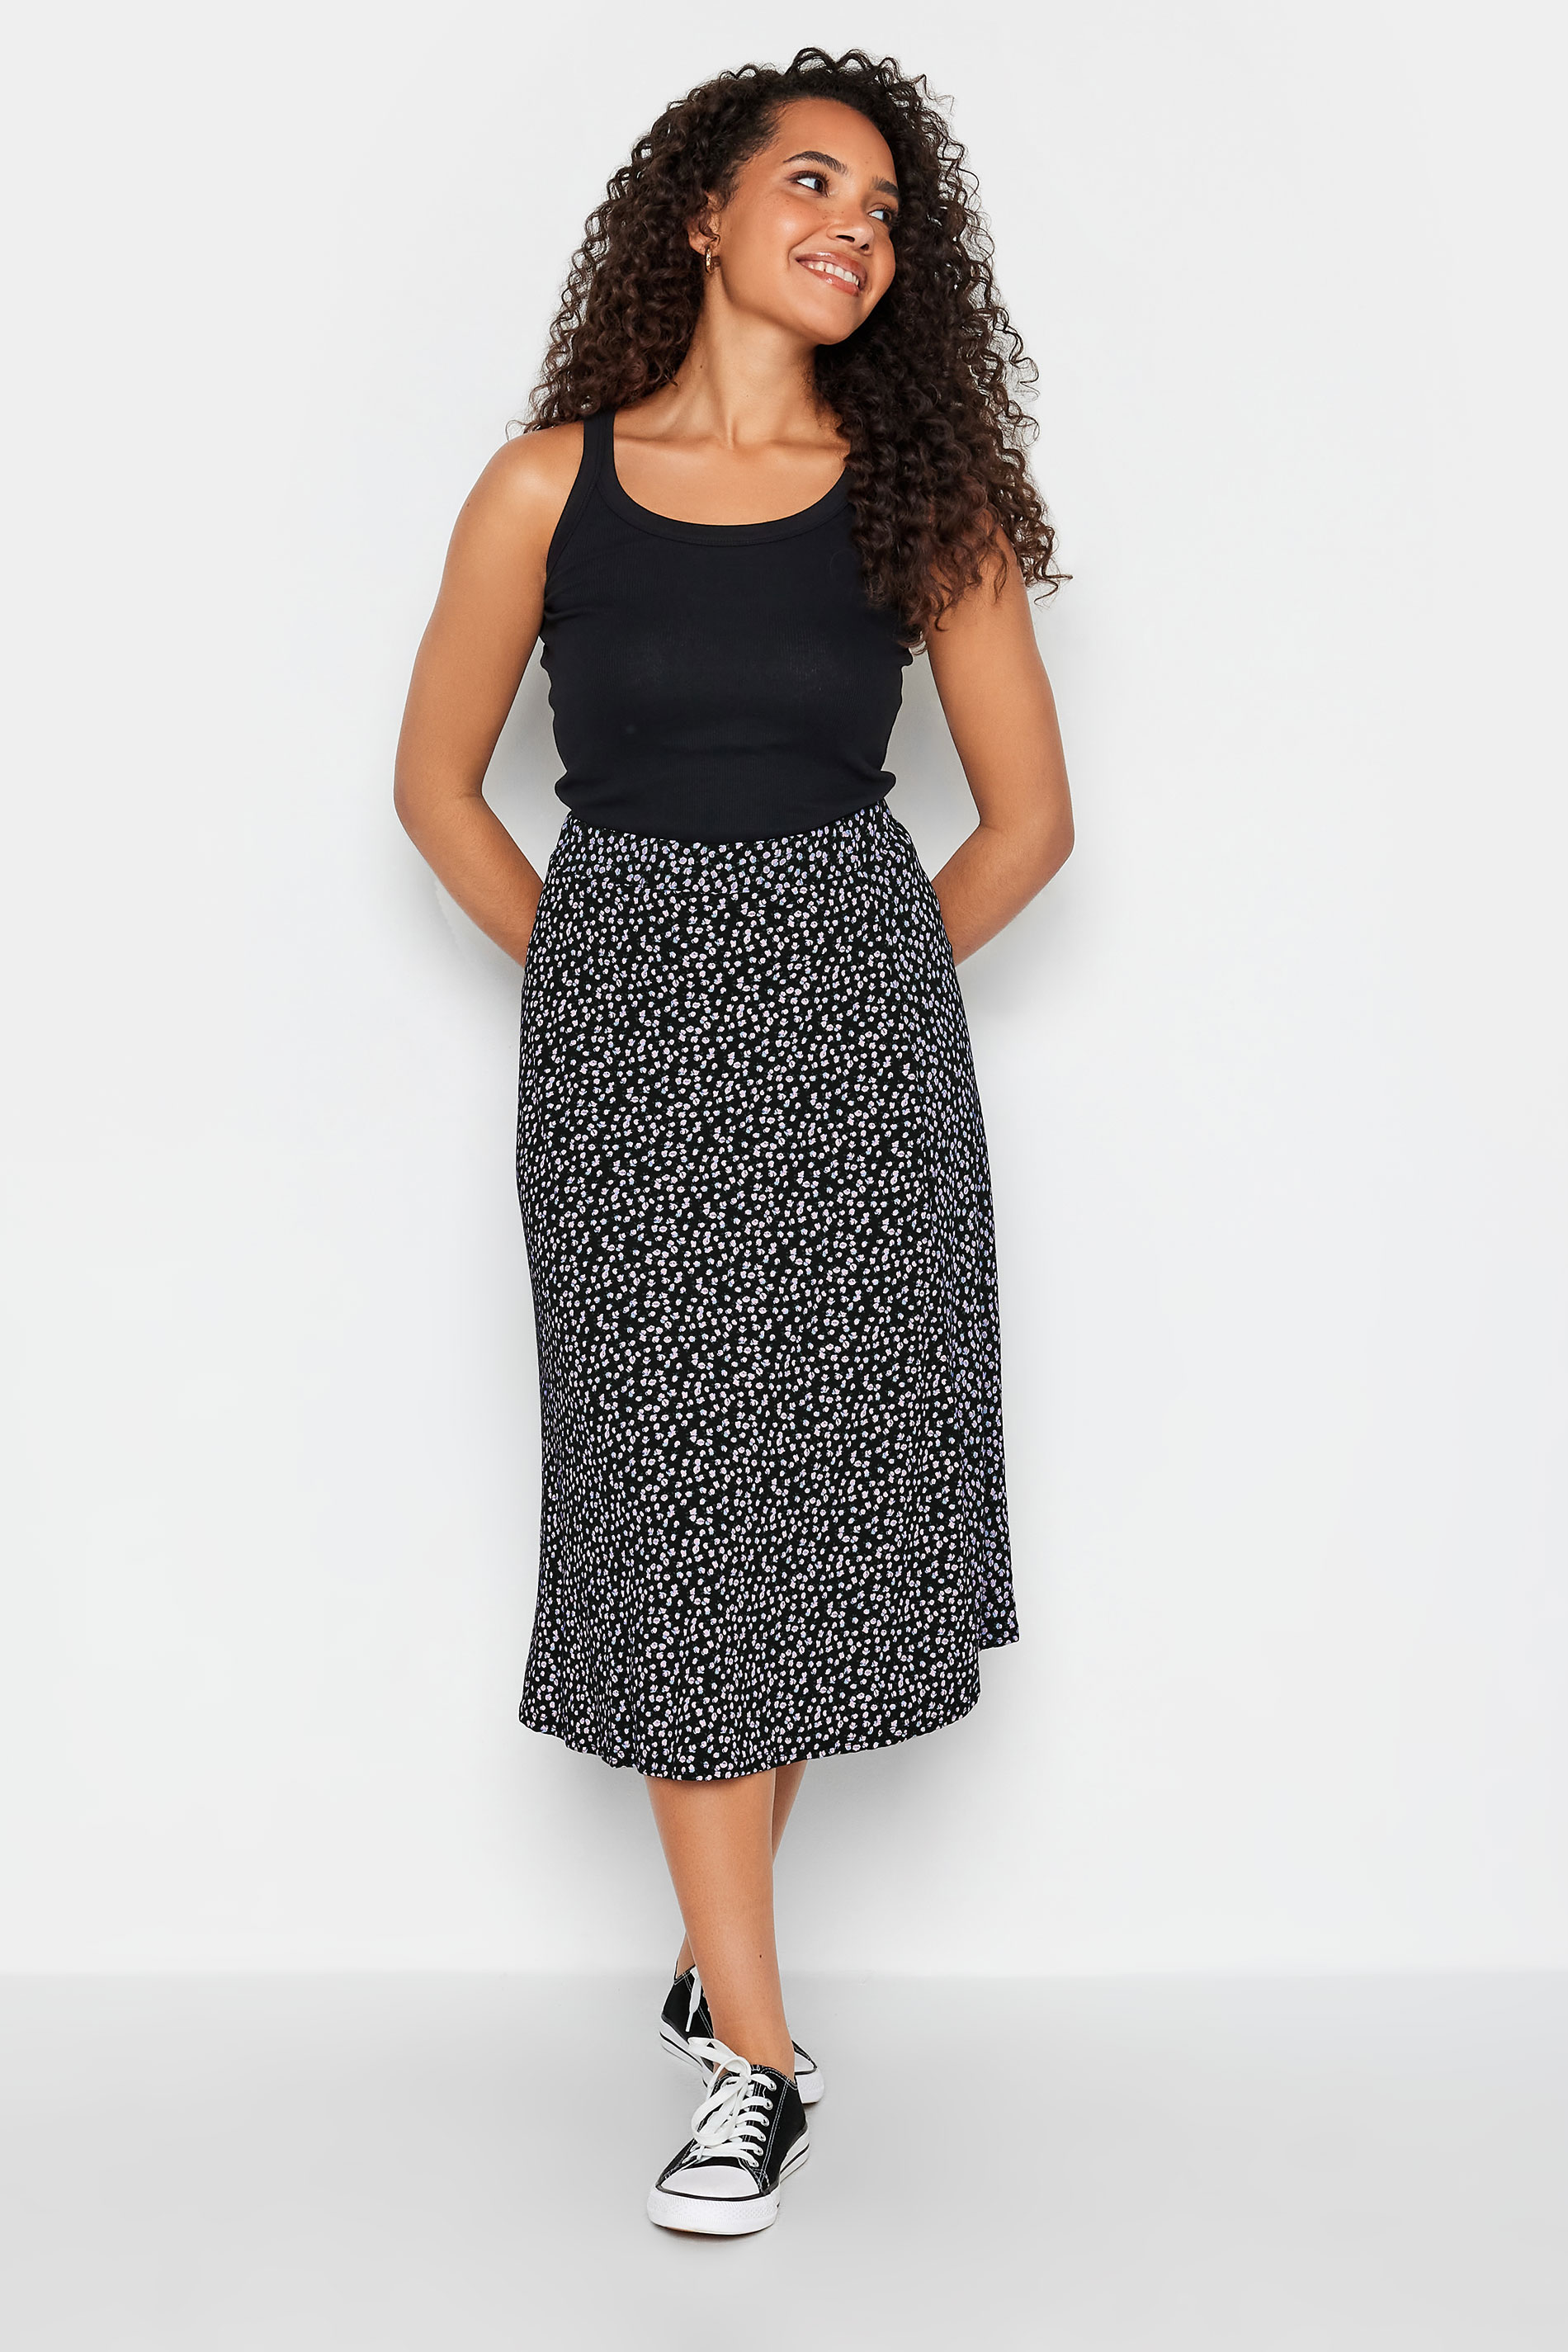 M&Co Black Ditsy Print Jersey Midi Skirt | M&Co 2